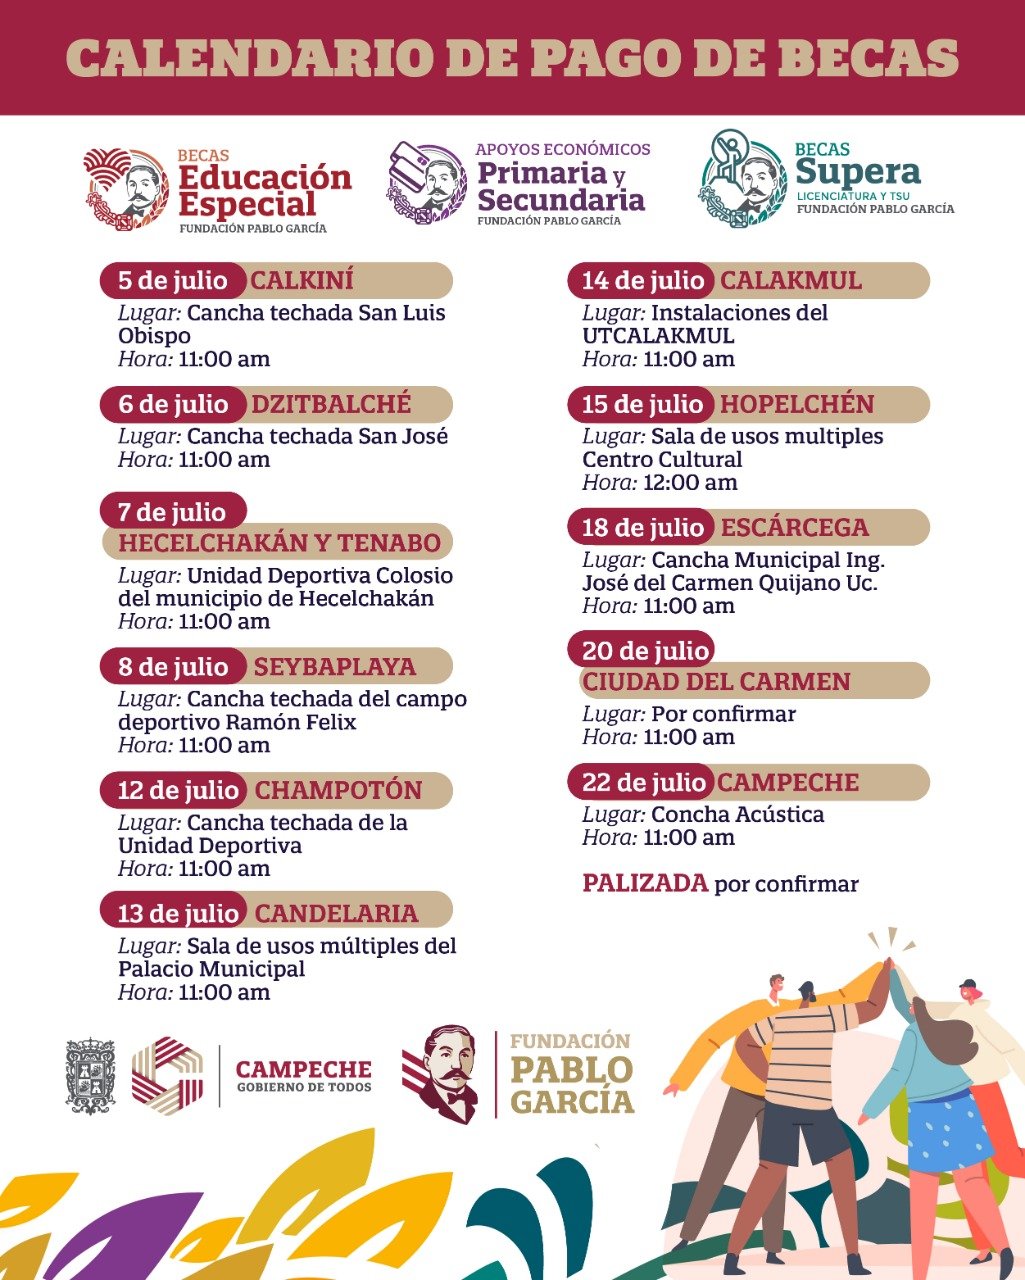 Calendario Pago de Becas: Fundación Pablo García